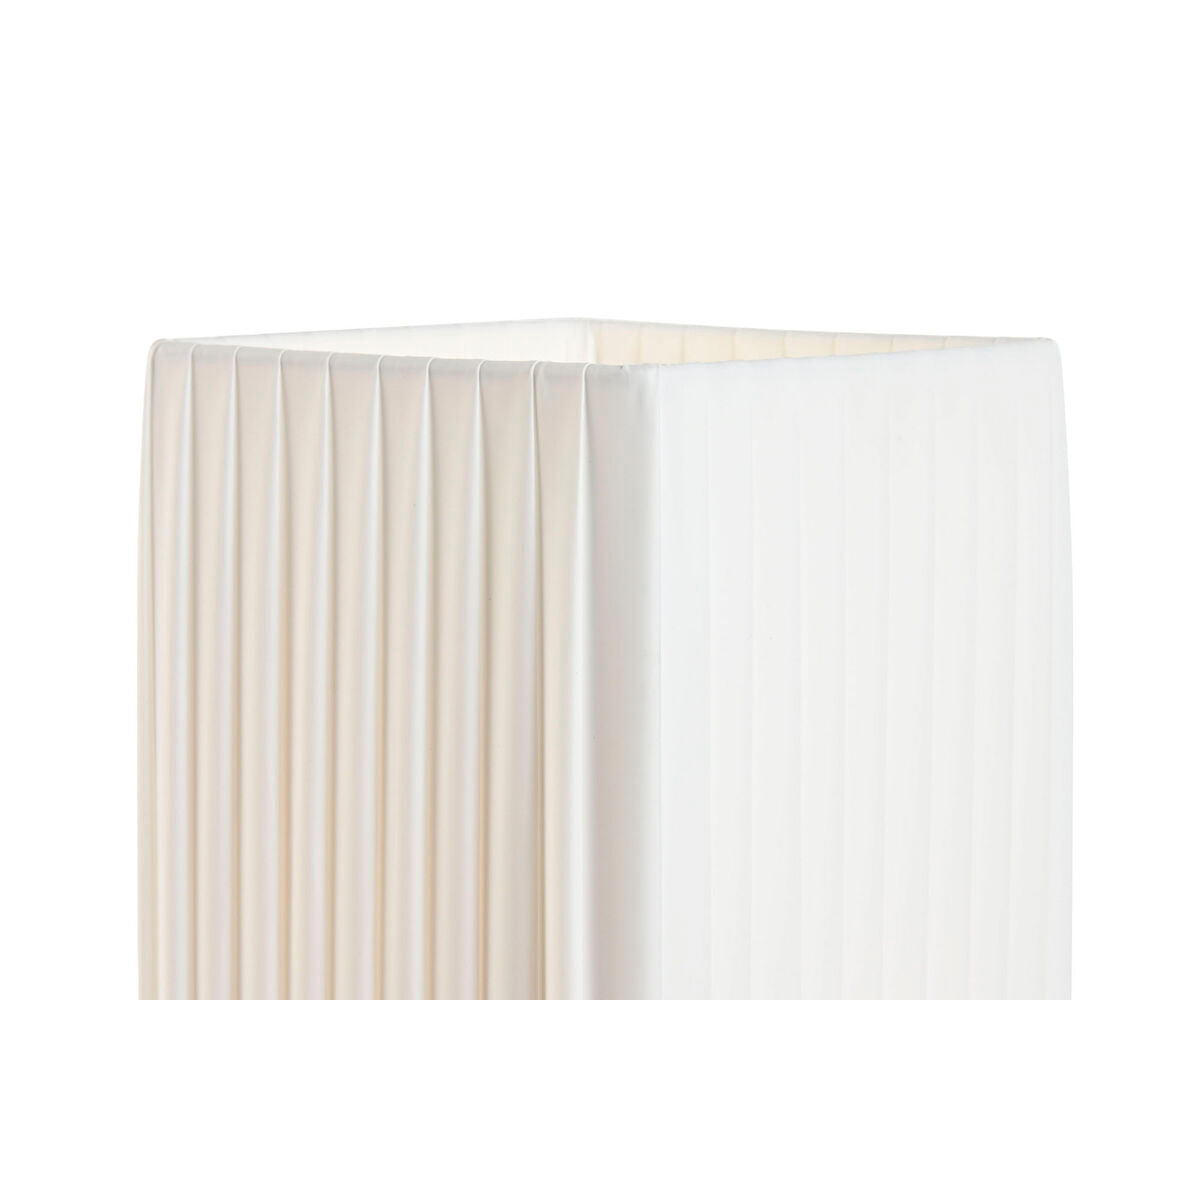 Lámpara de mesa Home ESPRIT Blanco Plateado Polietileno Hierro 50 W 220 V 15 x 15 x 43 cm